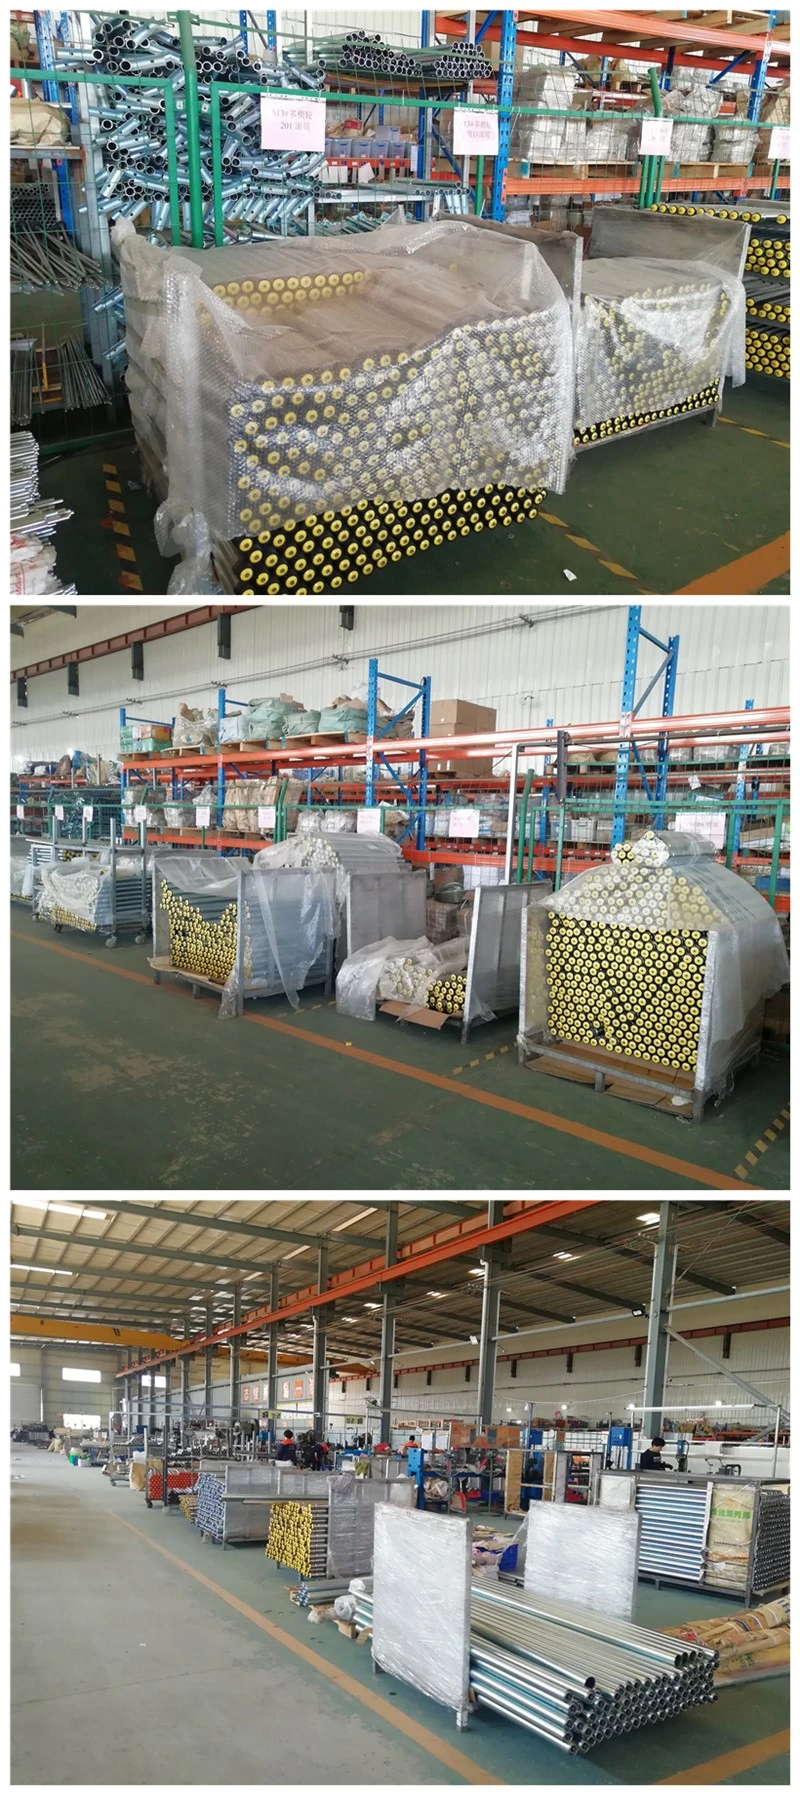 All-Purpose Plastic Roller Conveyor for Logistics Conveying